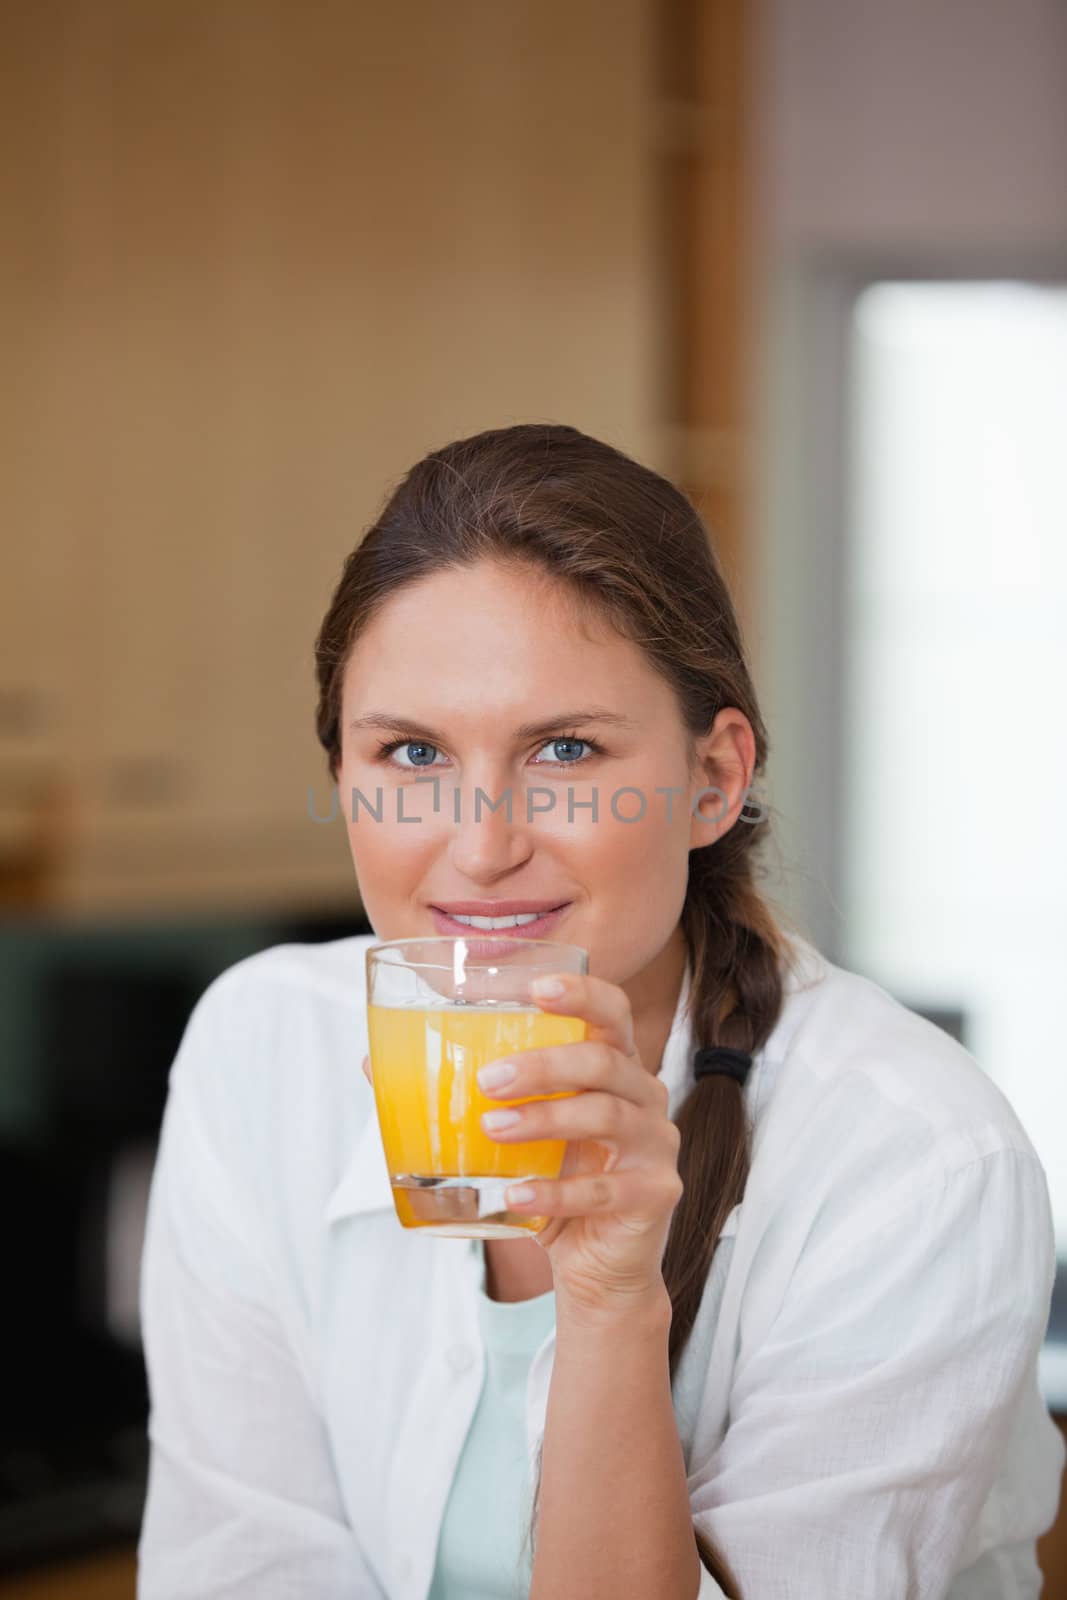 Woman drinking orange juice in a kitchen